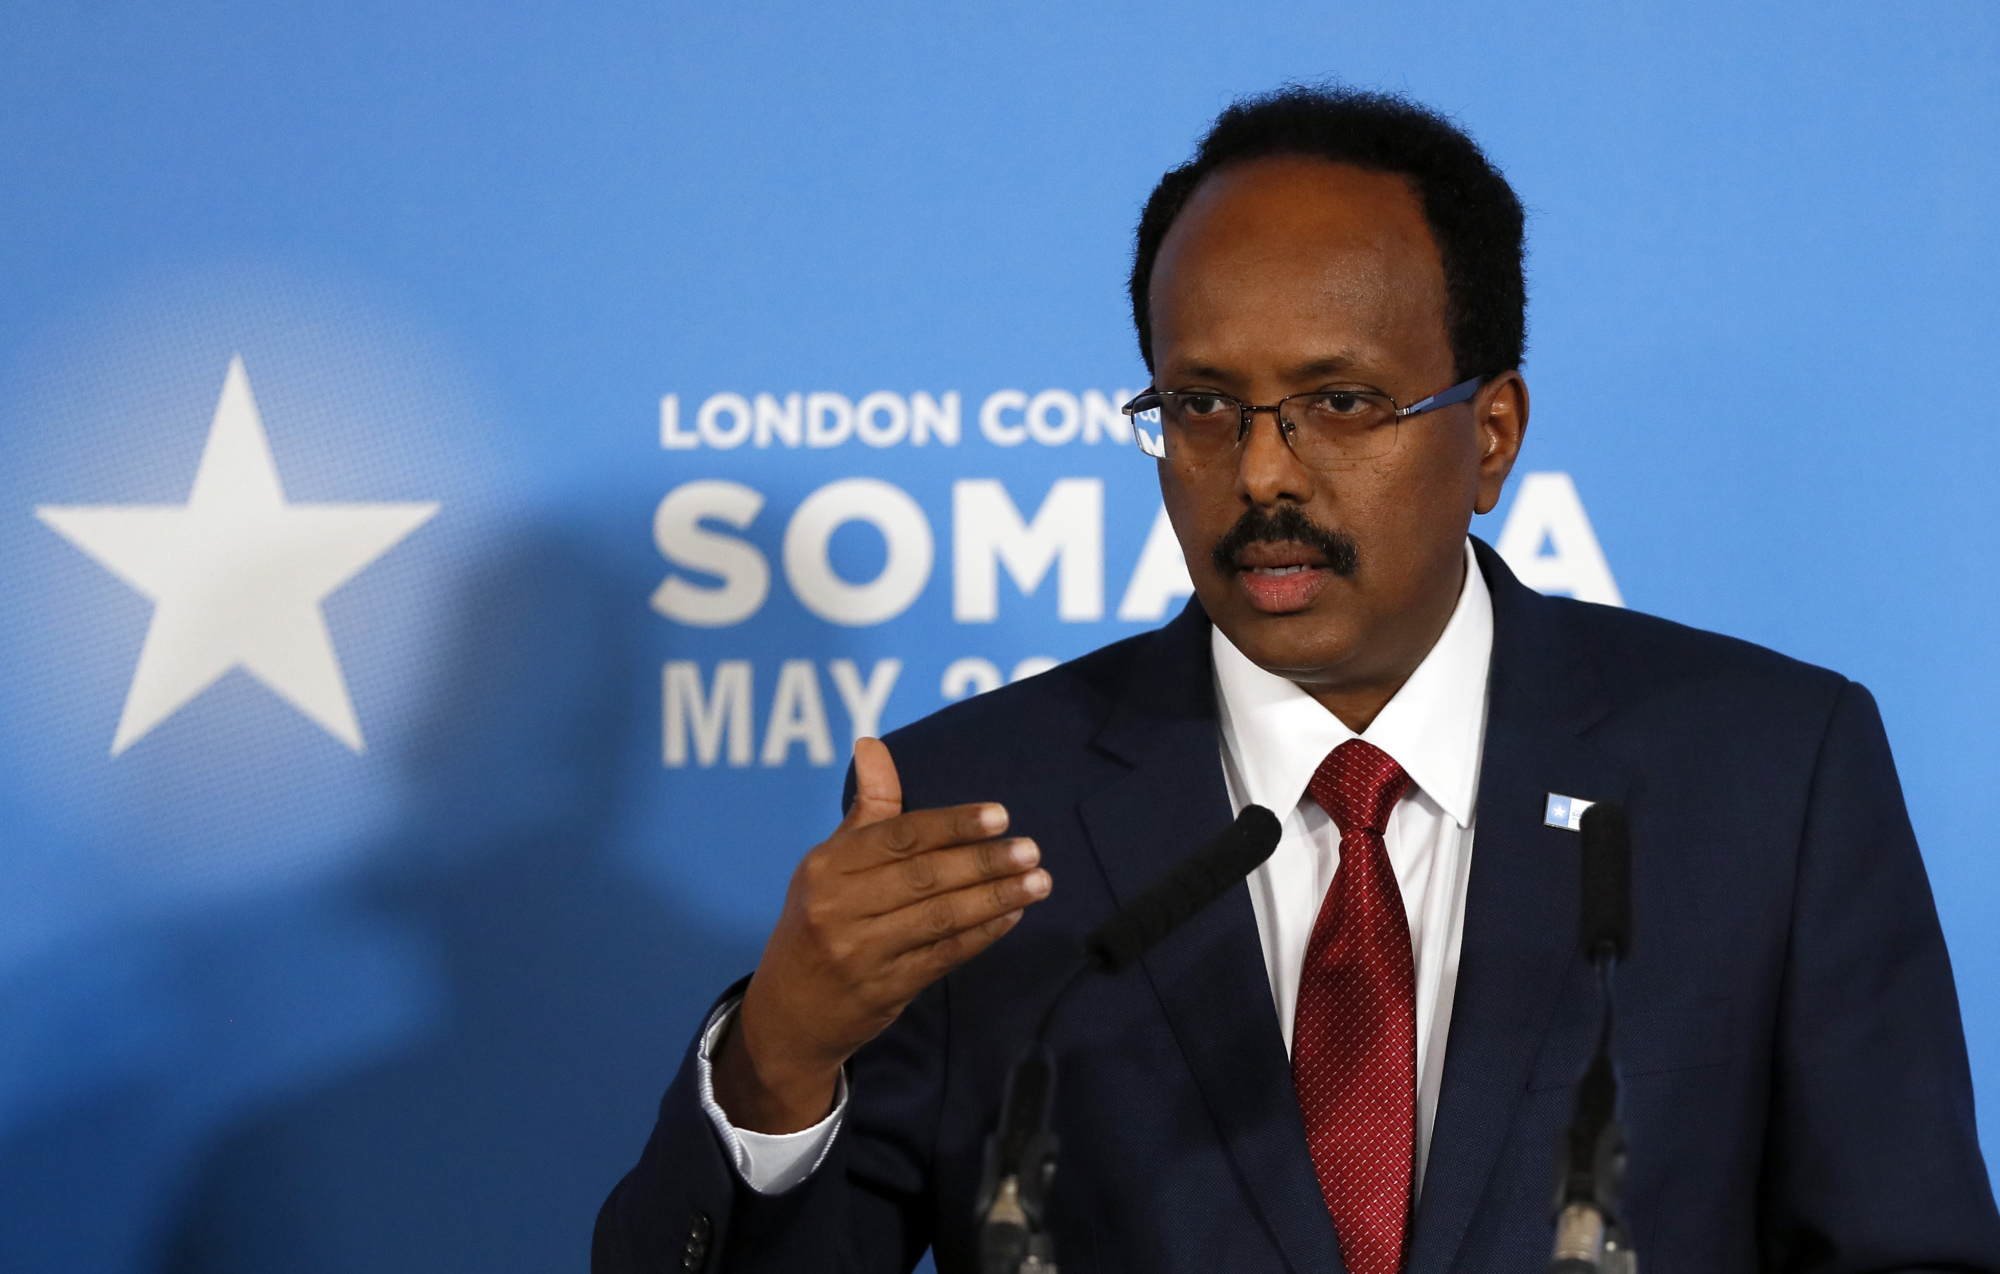 Somali crisis getting worse as Farmaajo hinders solutions